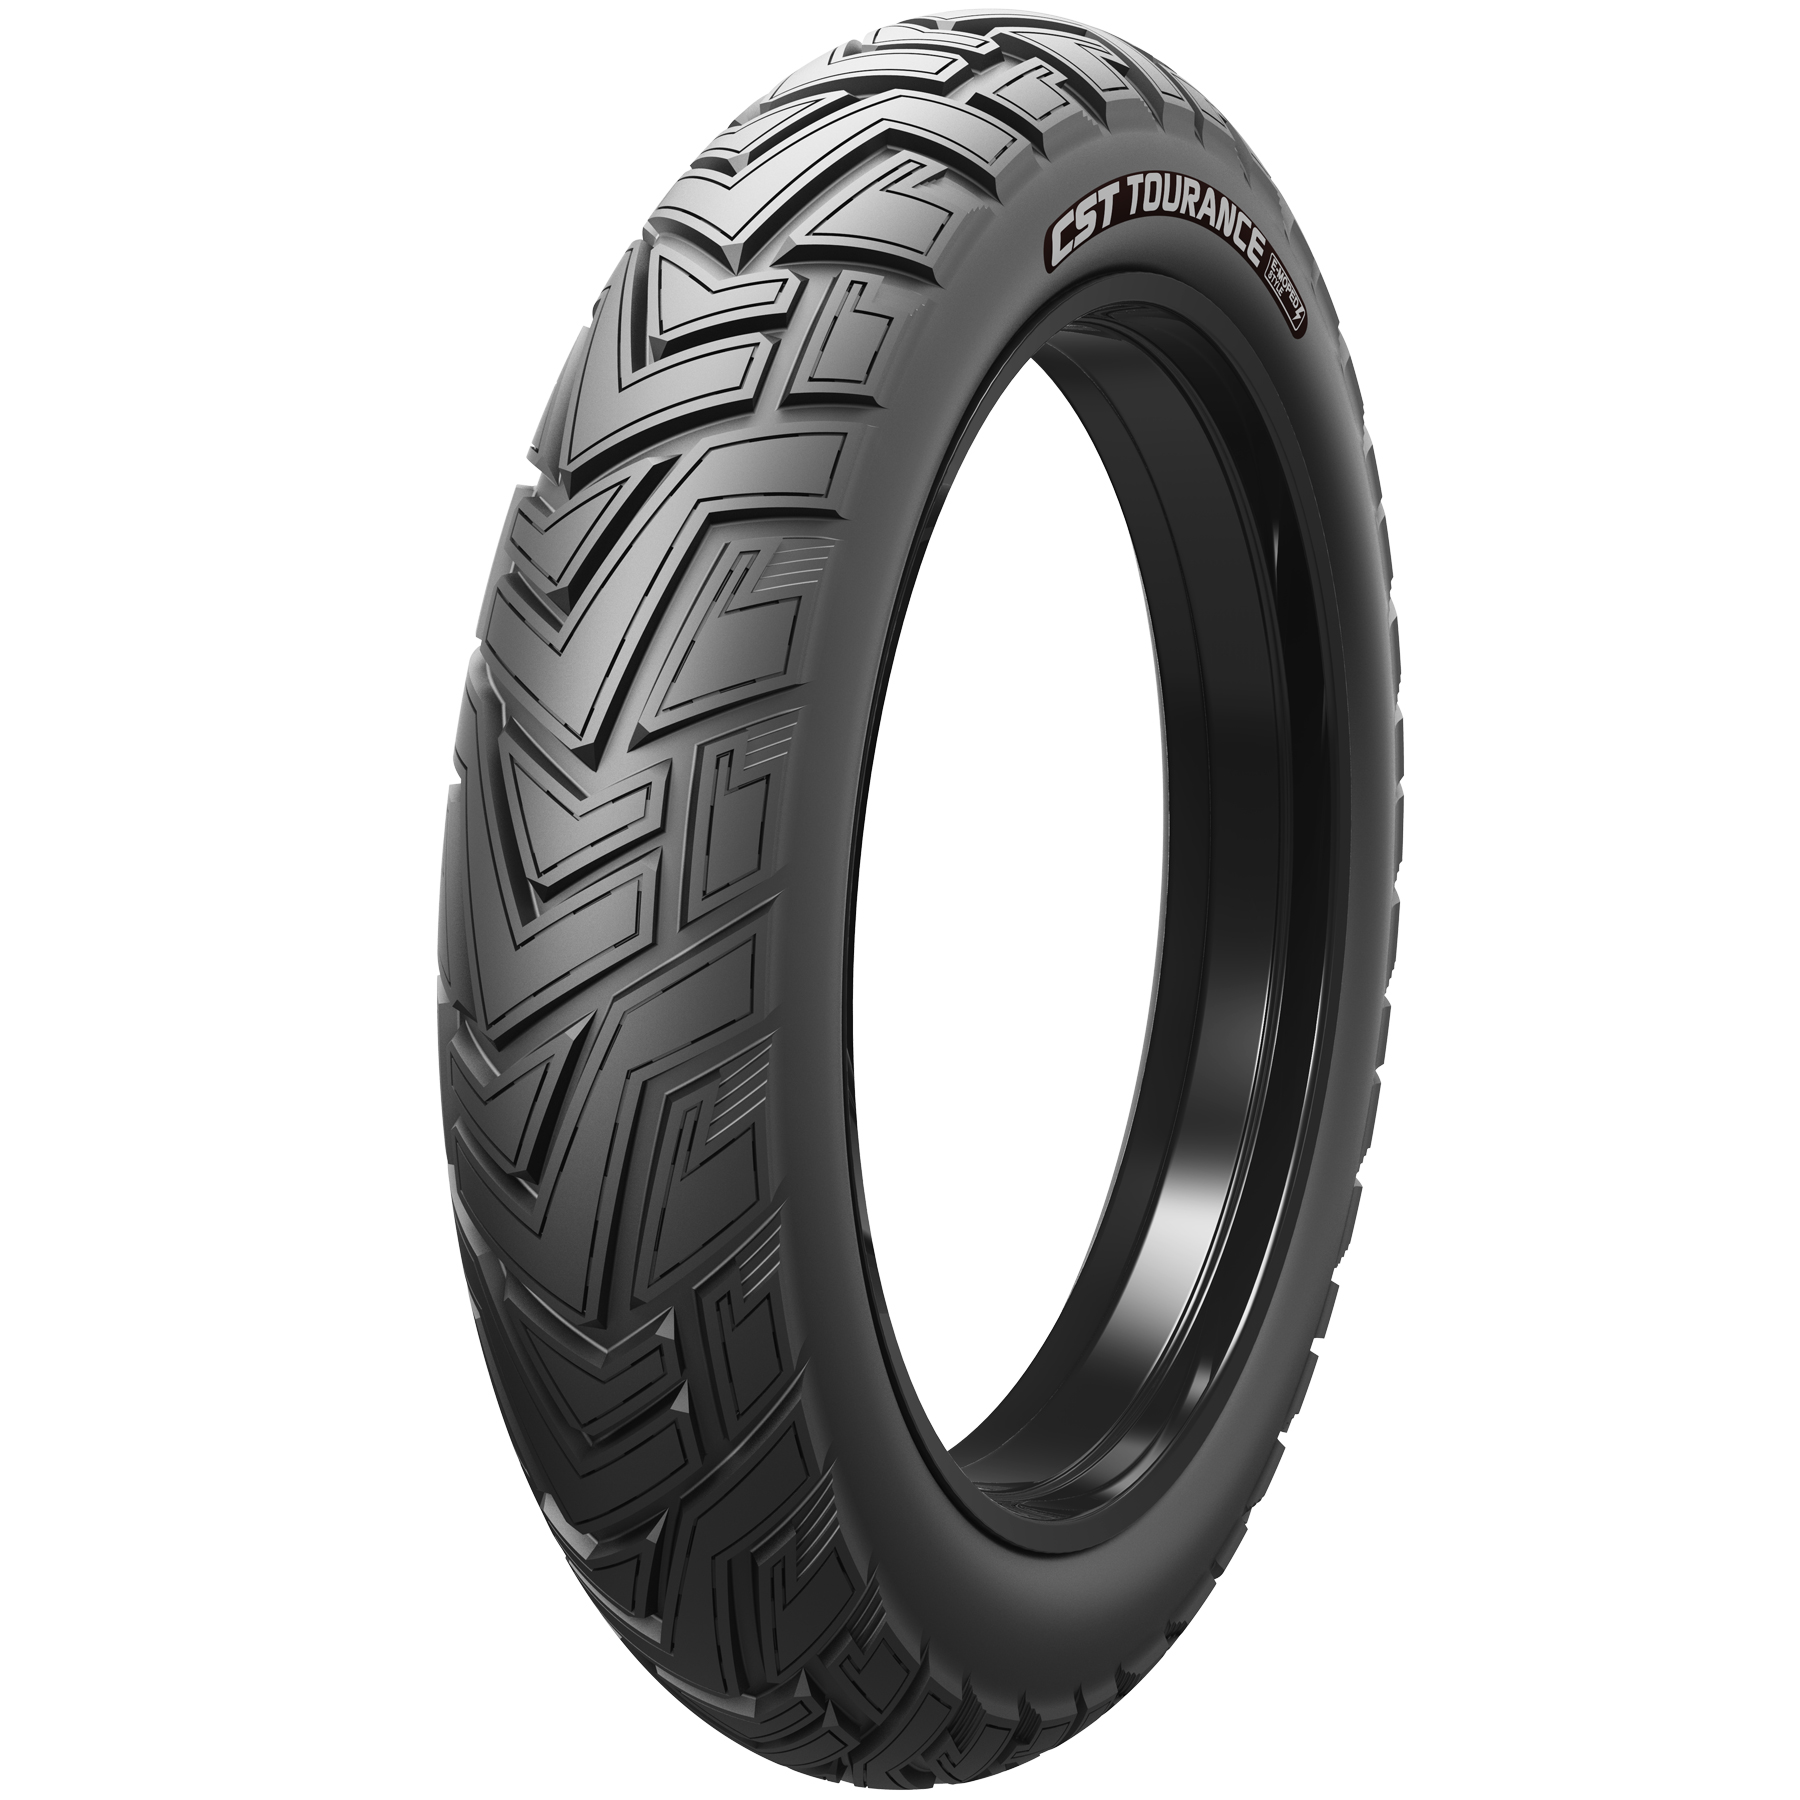 Tourance - CST Tires USA